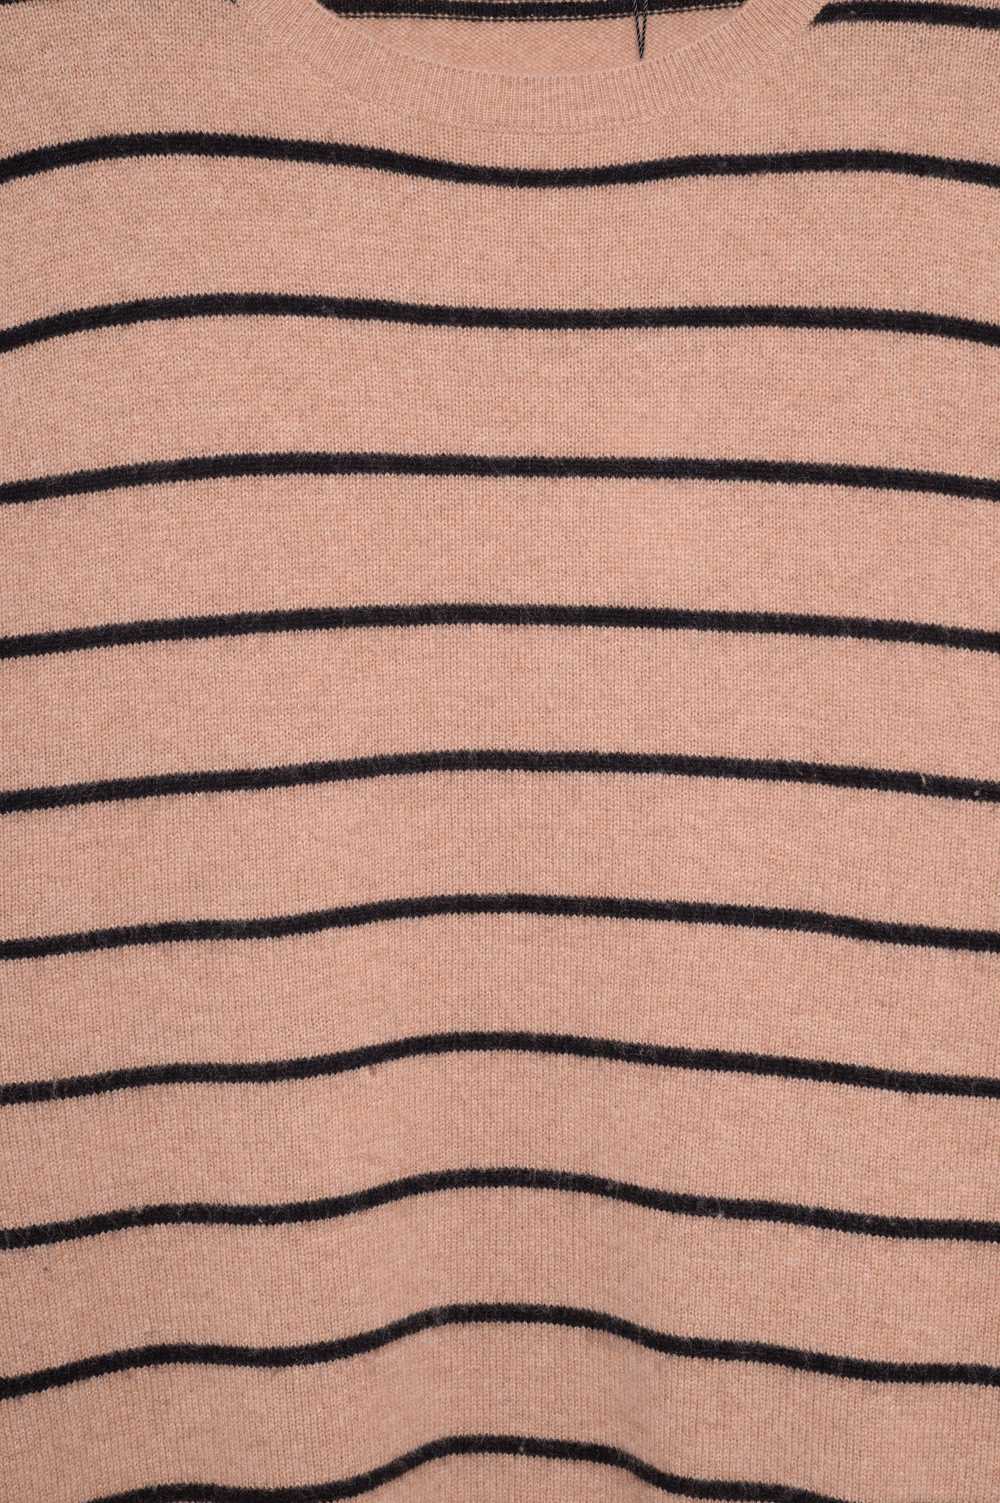 Soft Cashmere Striped Sweater - image 2